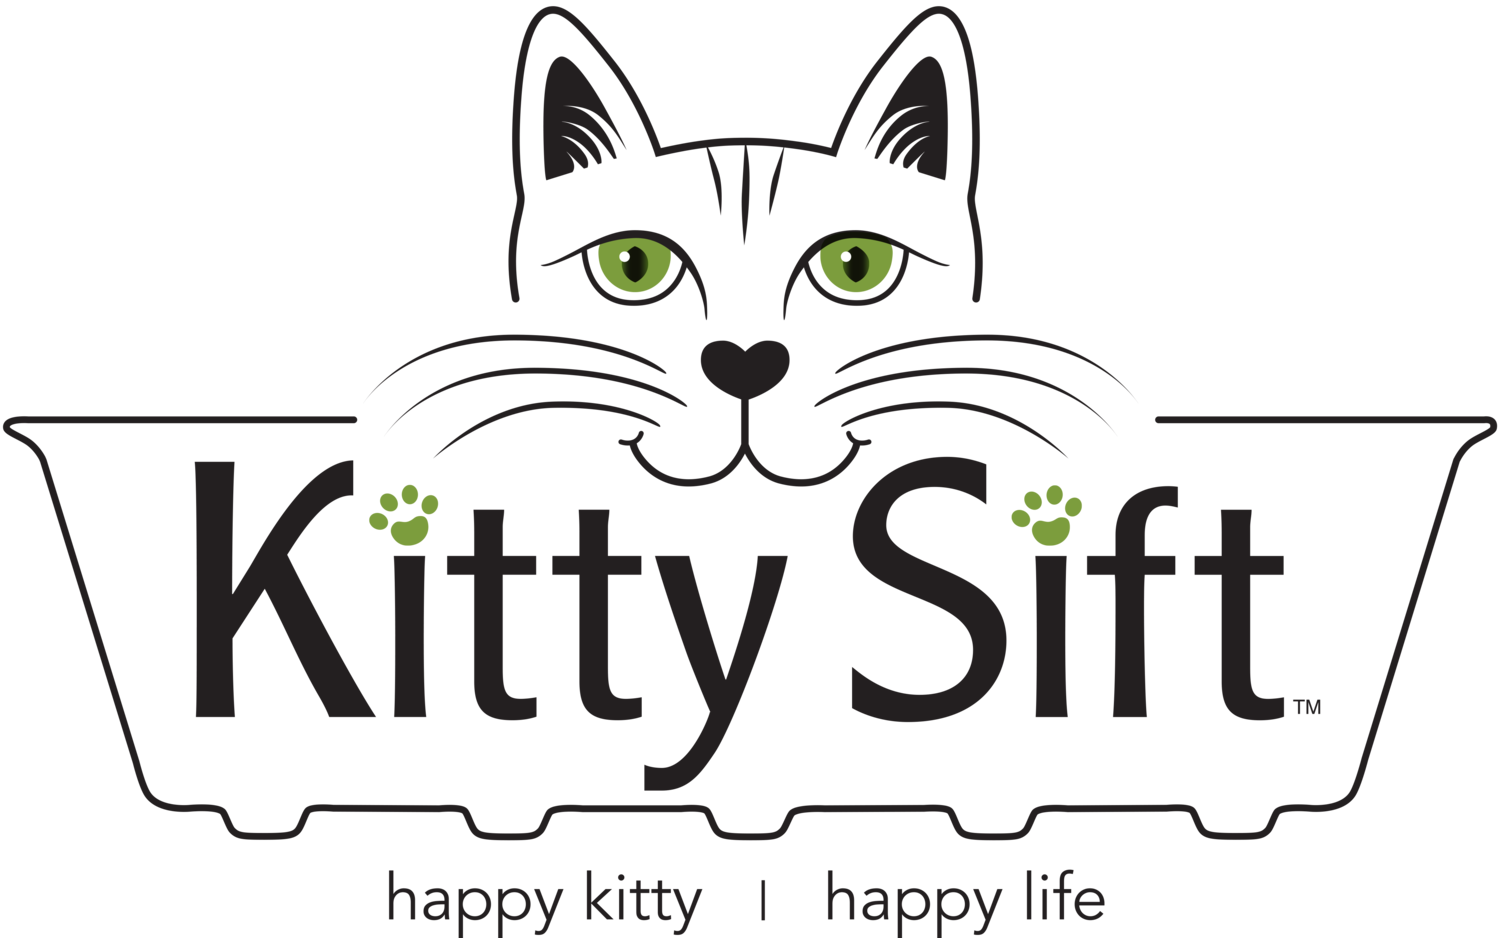 Kitty Sift®